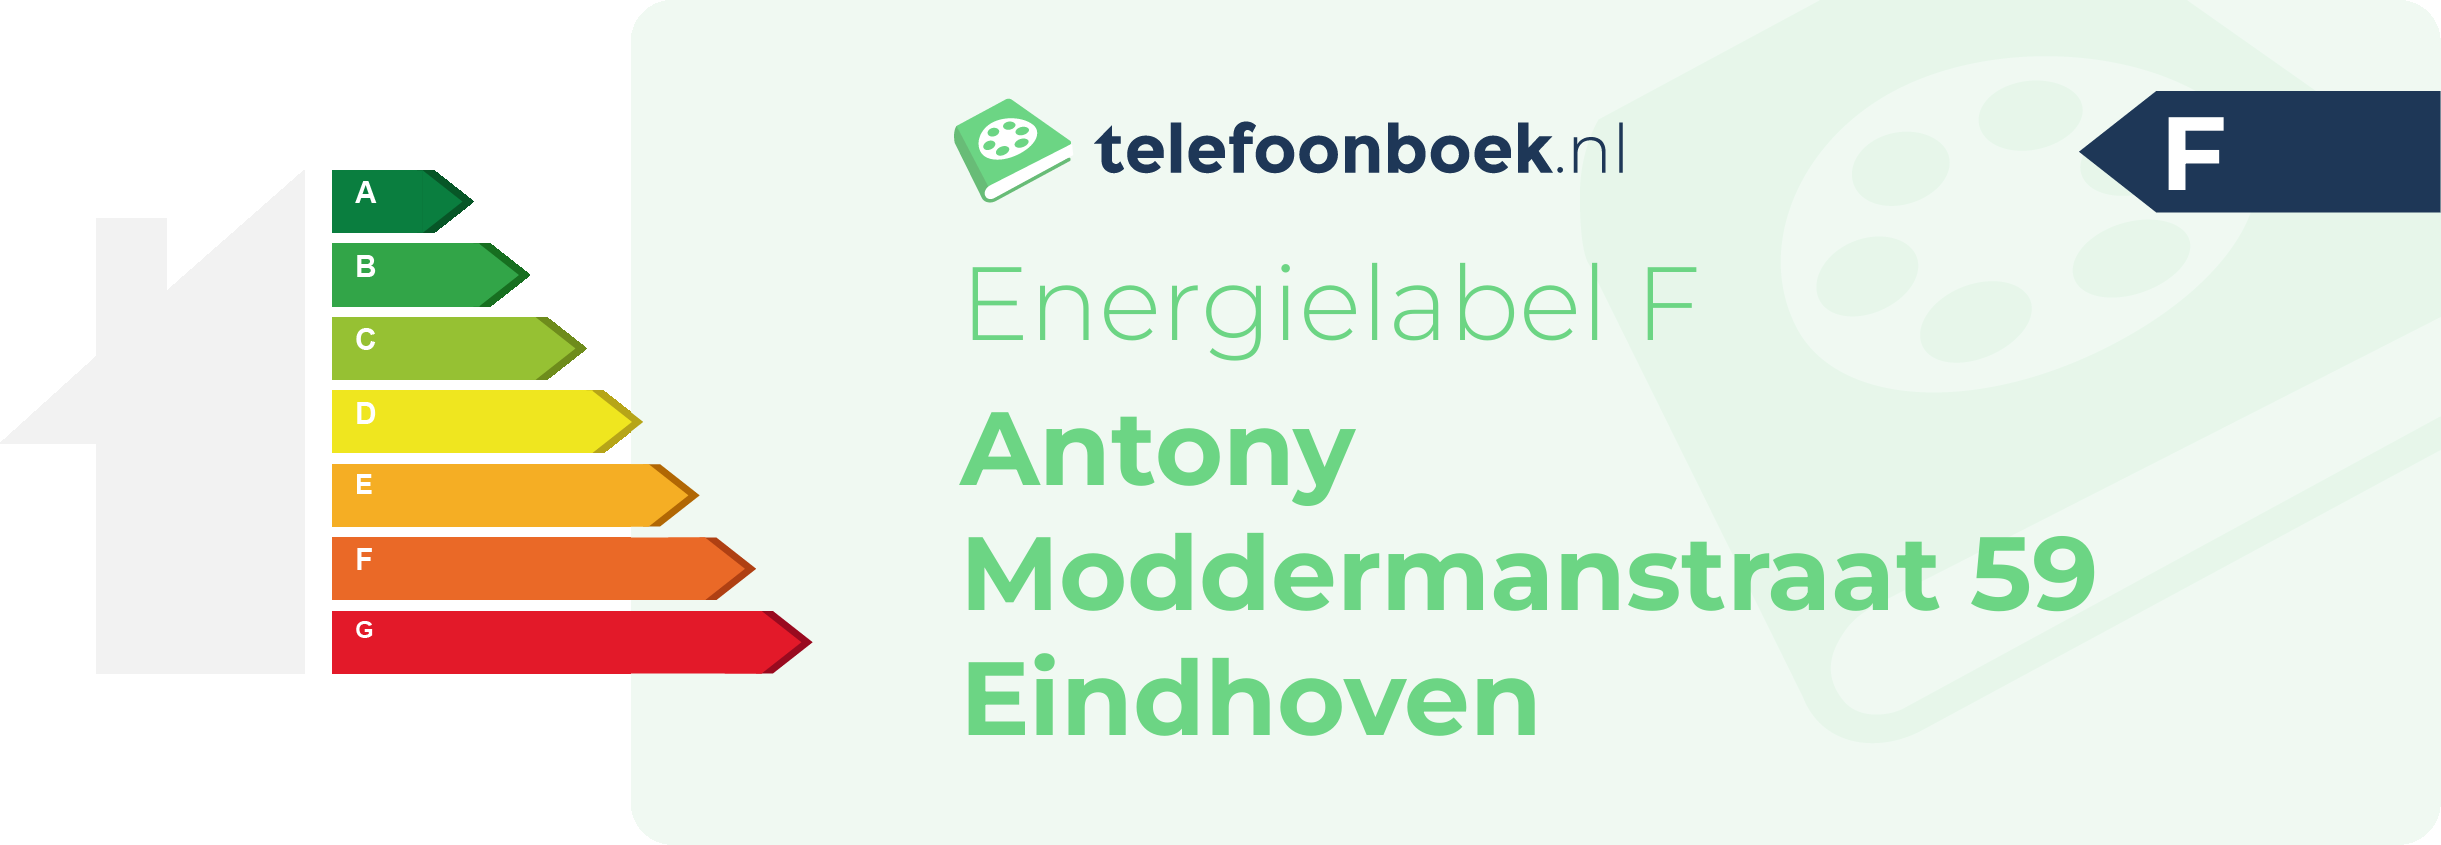 Energielabel Antony Moddermanstraat 59 Eindhoven